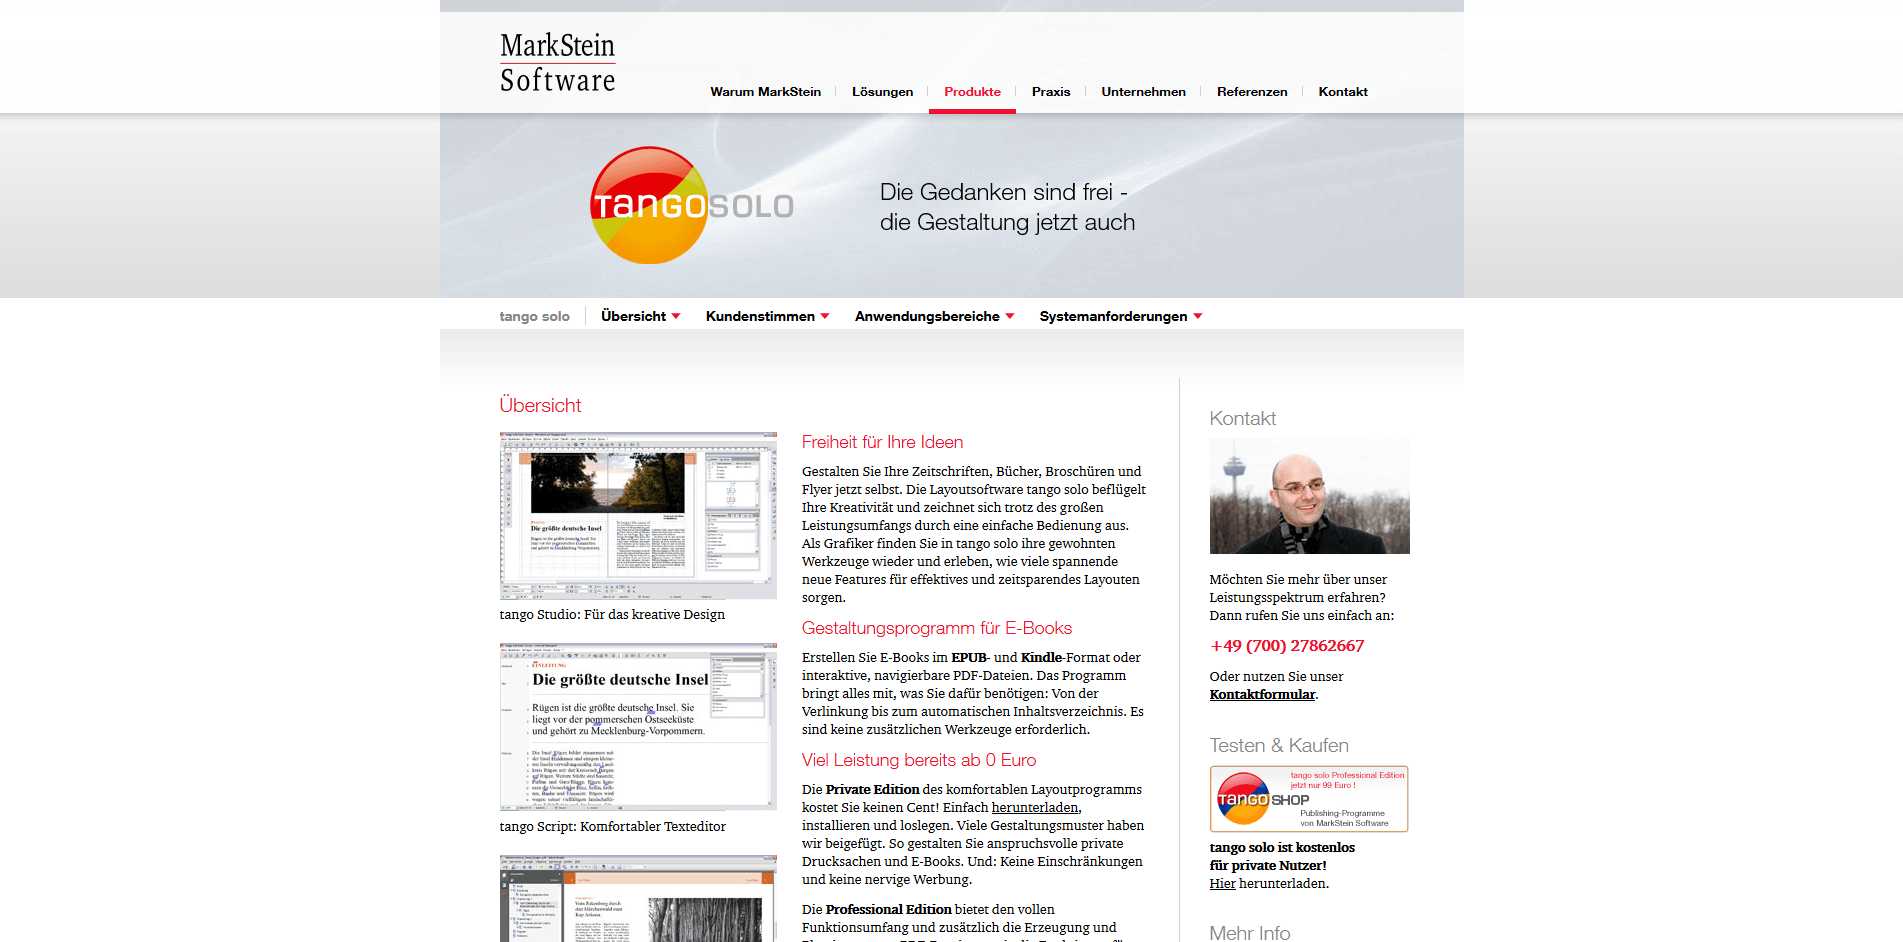 Startseite Markstein Software: Tango Solo